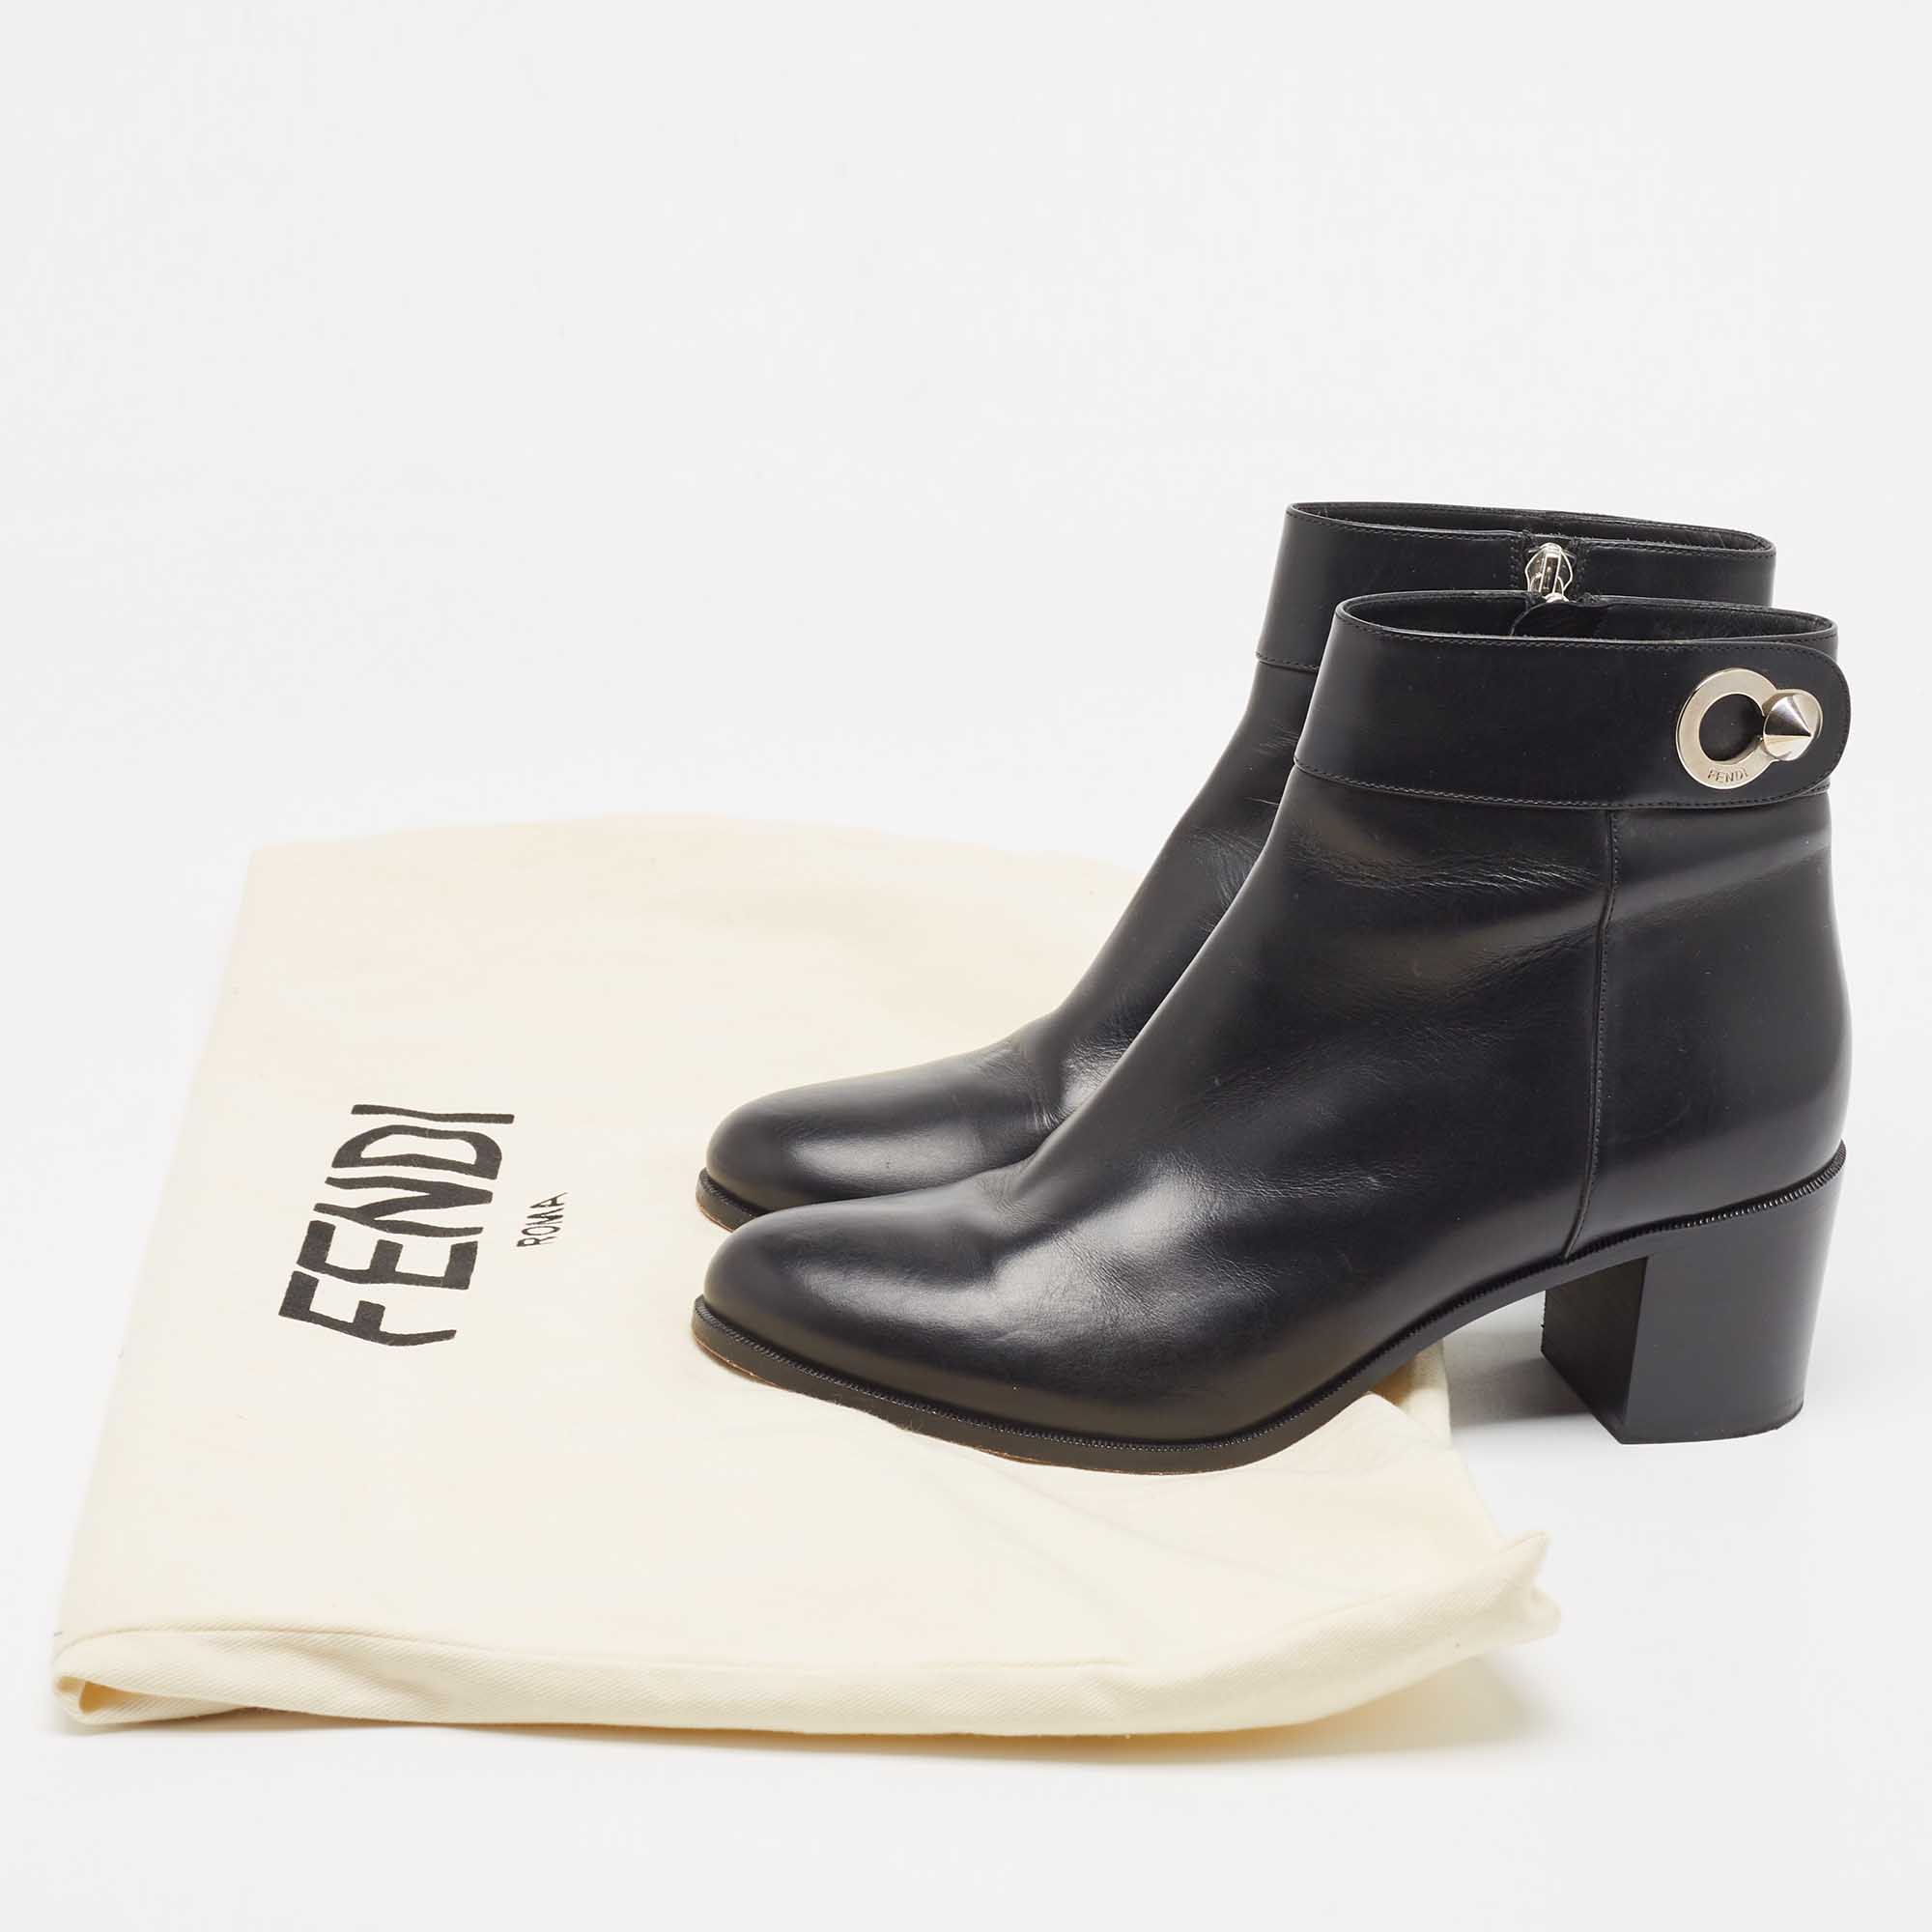 Fendi Black Leather Ankle Boots Size 39.5